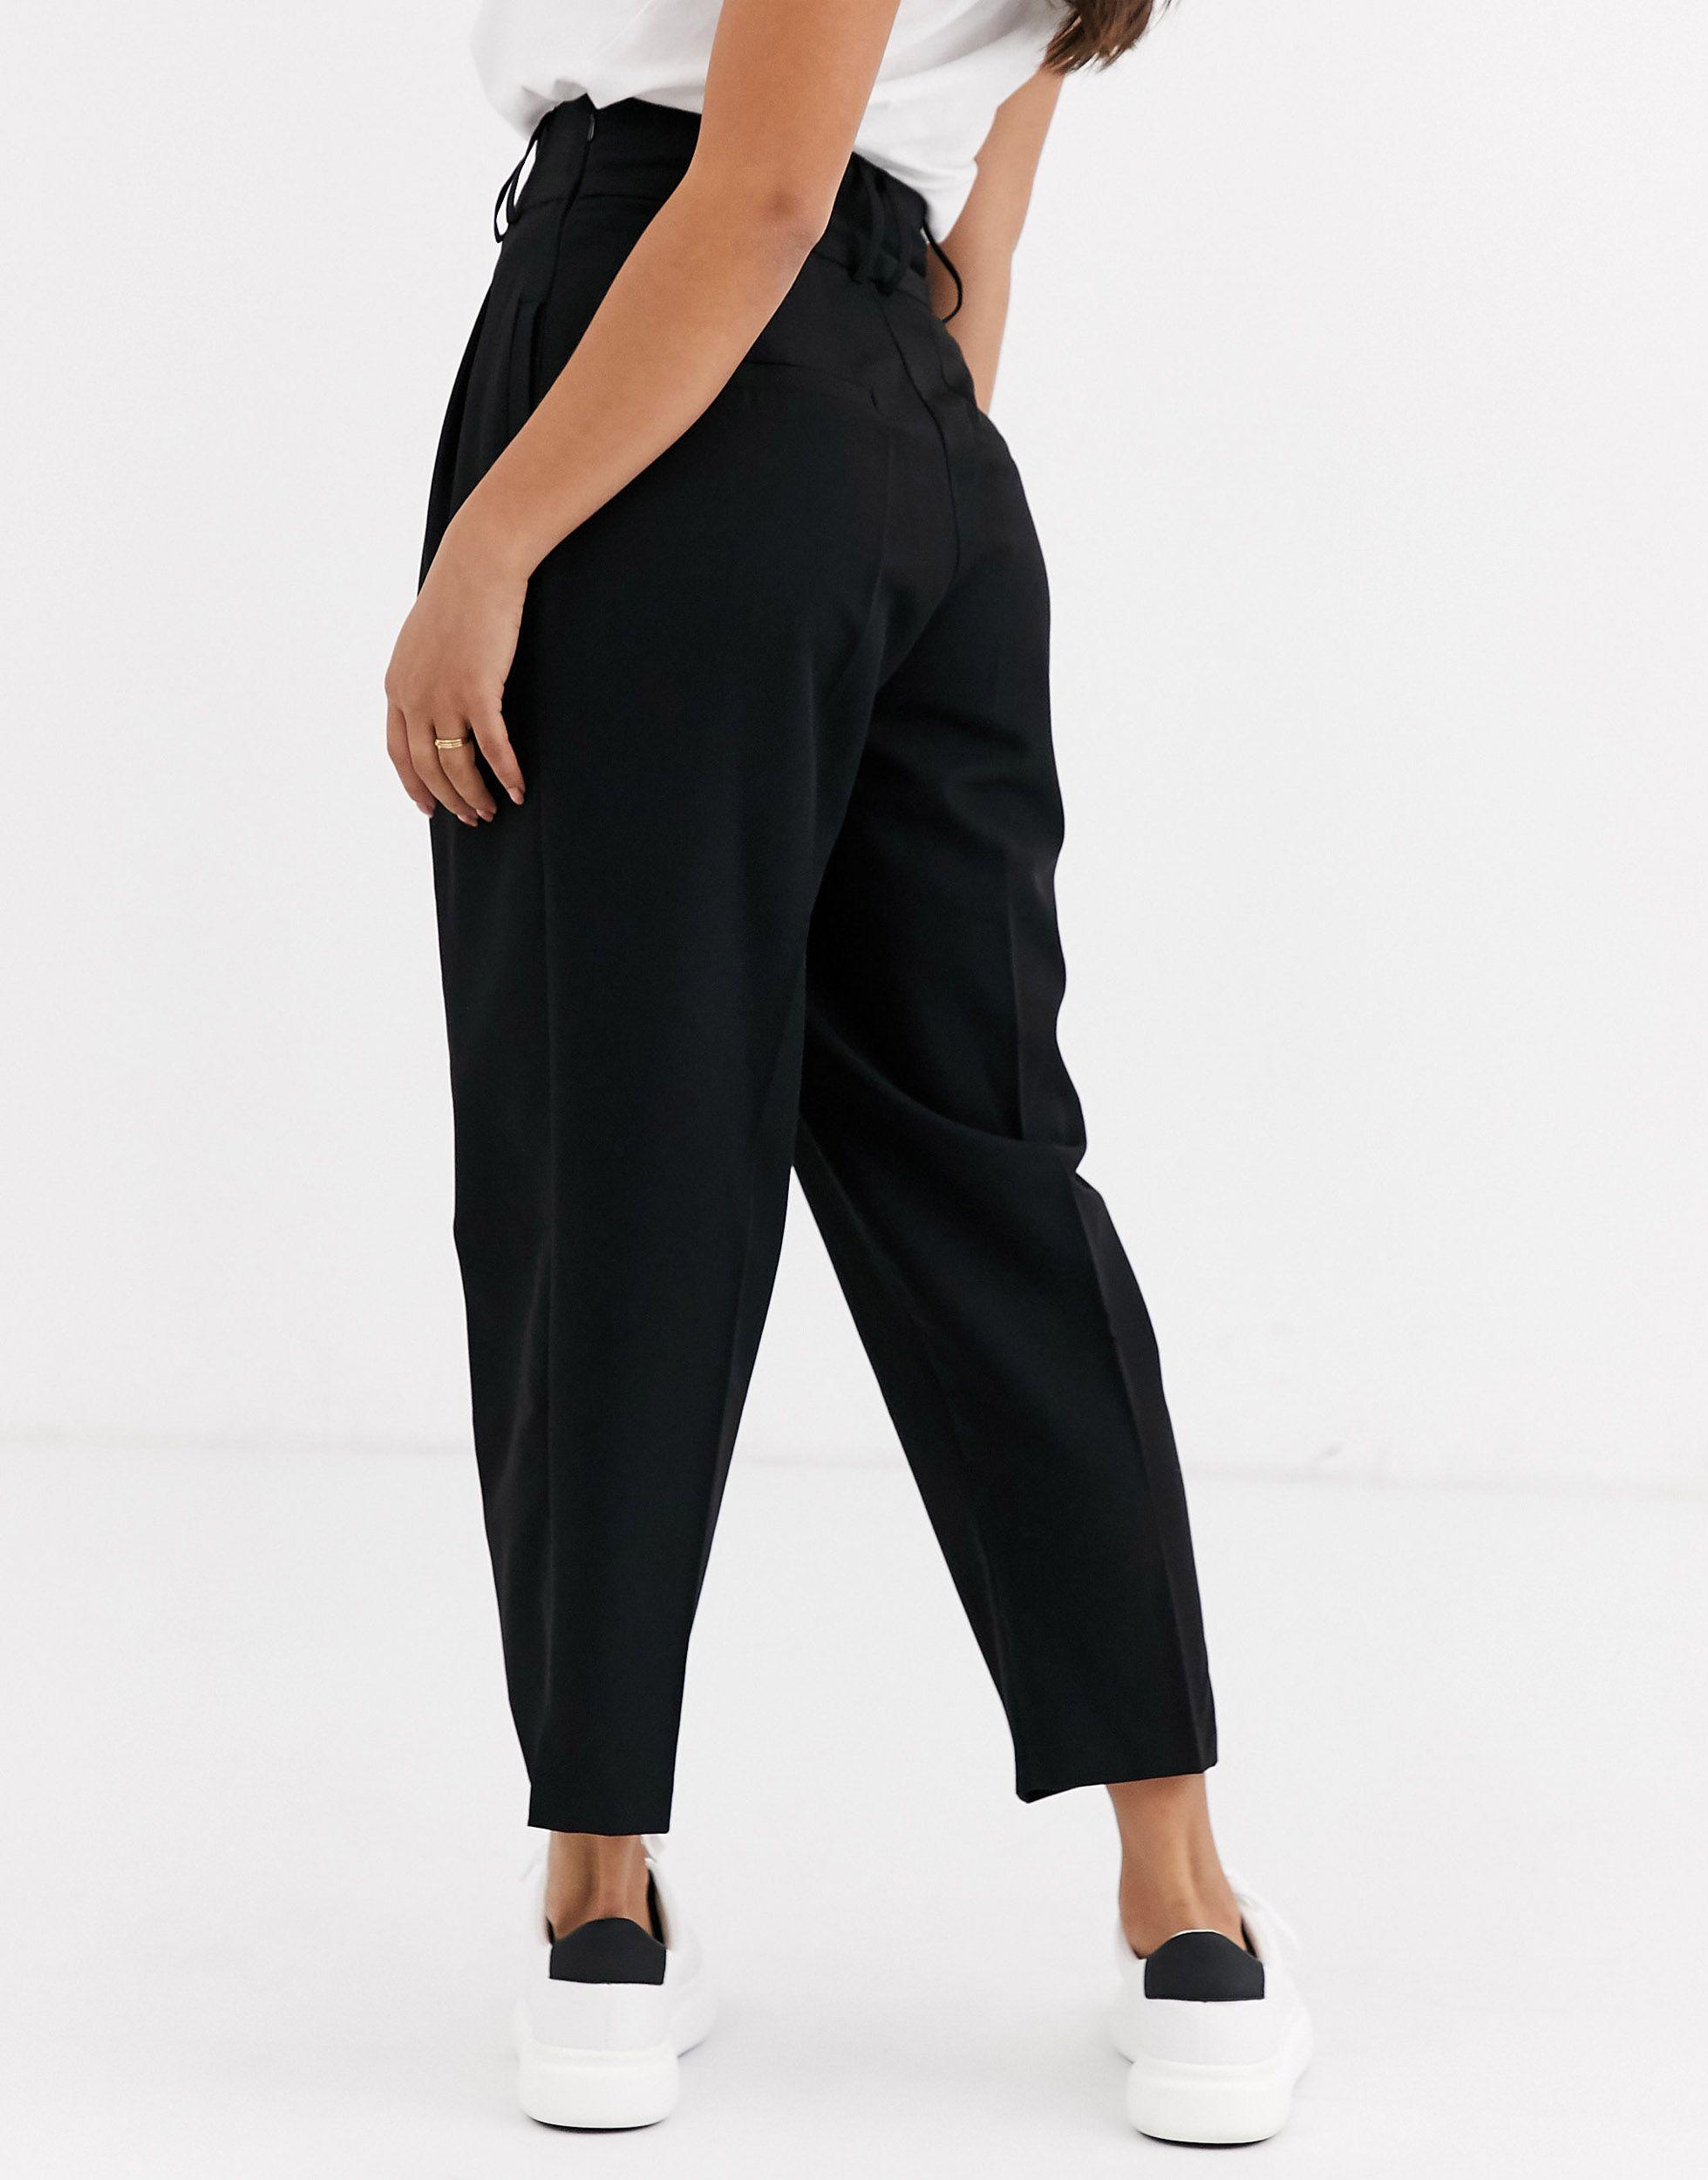 femiss Womans Tailored Wide Leg Trousers Office Work Bootcut Smart Formal  Black Trouser (8, Black) : Amazon.co.uk: Fashion